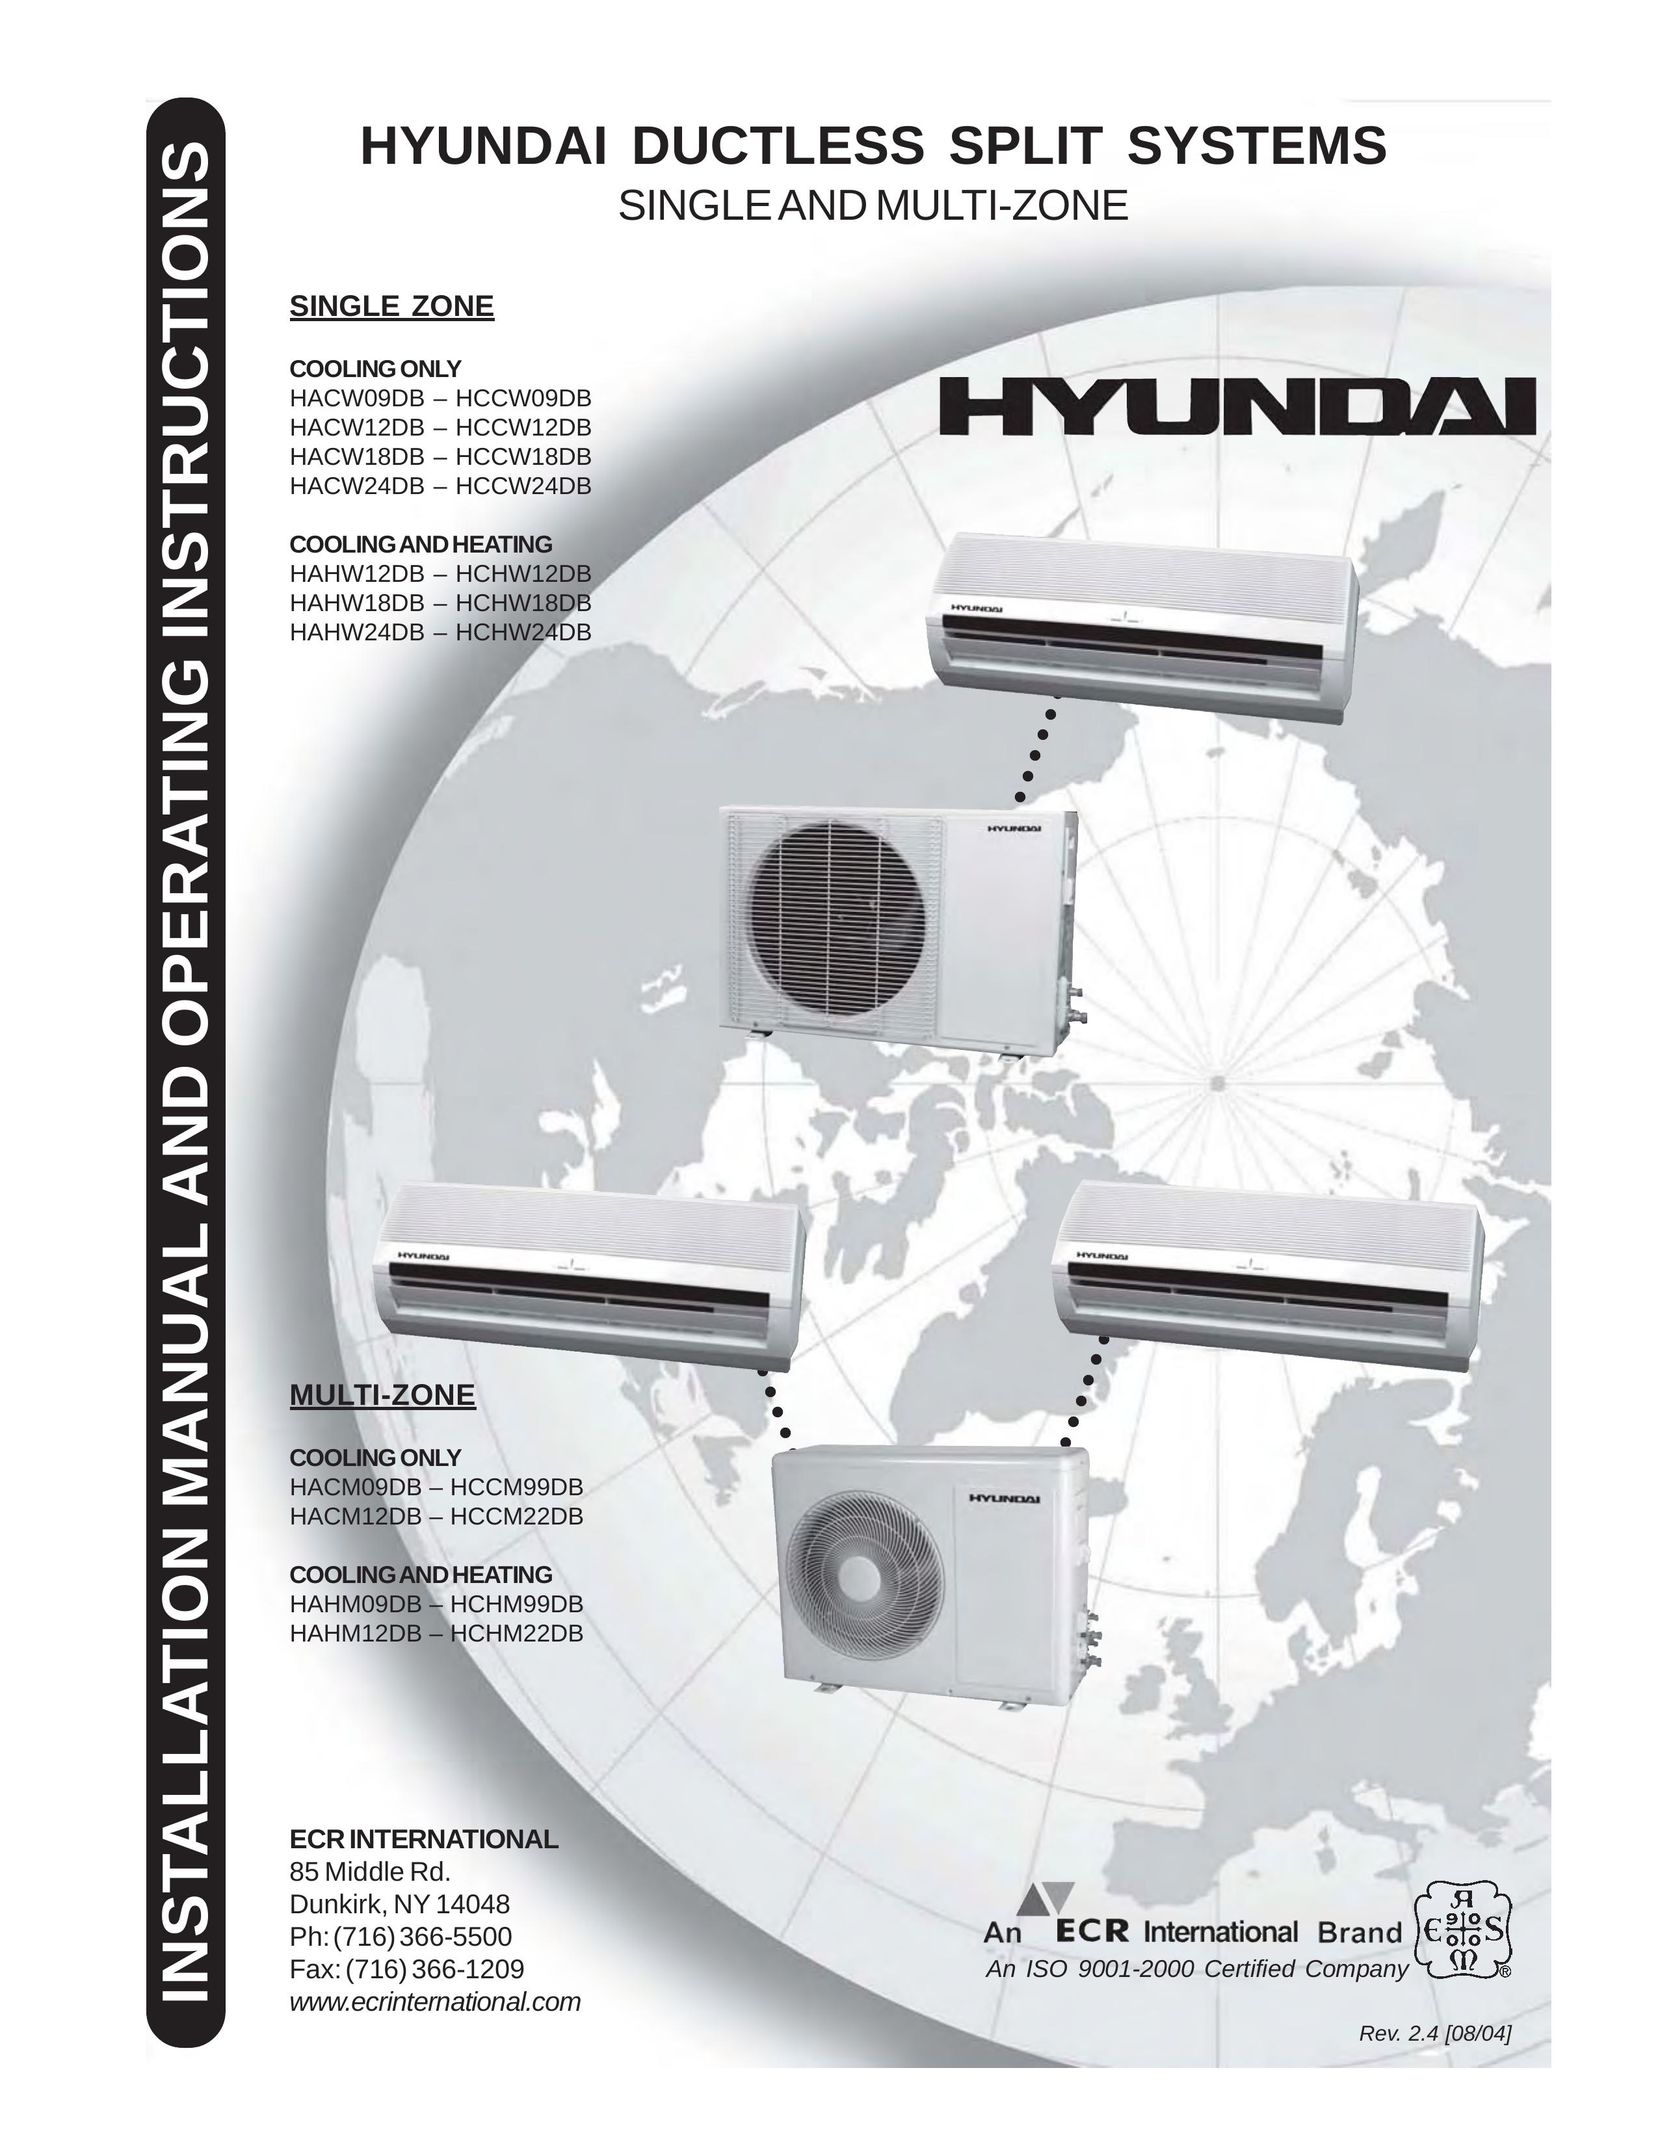 Hyundai HACM12DB - HCCM22DB Air Conditioner User Manual